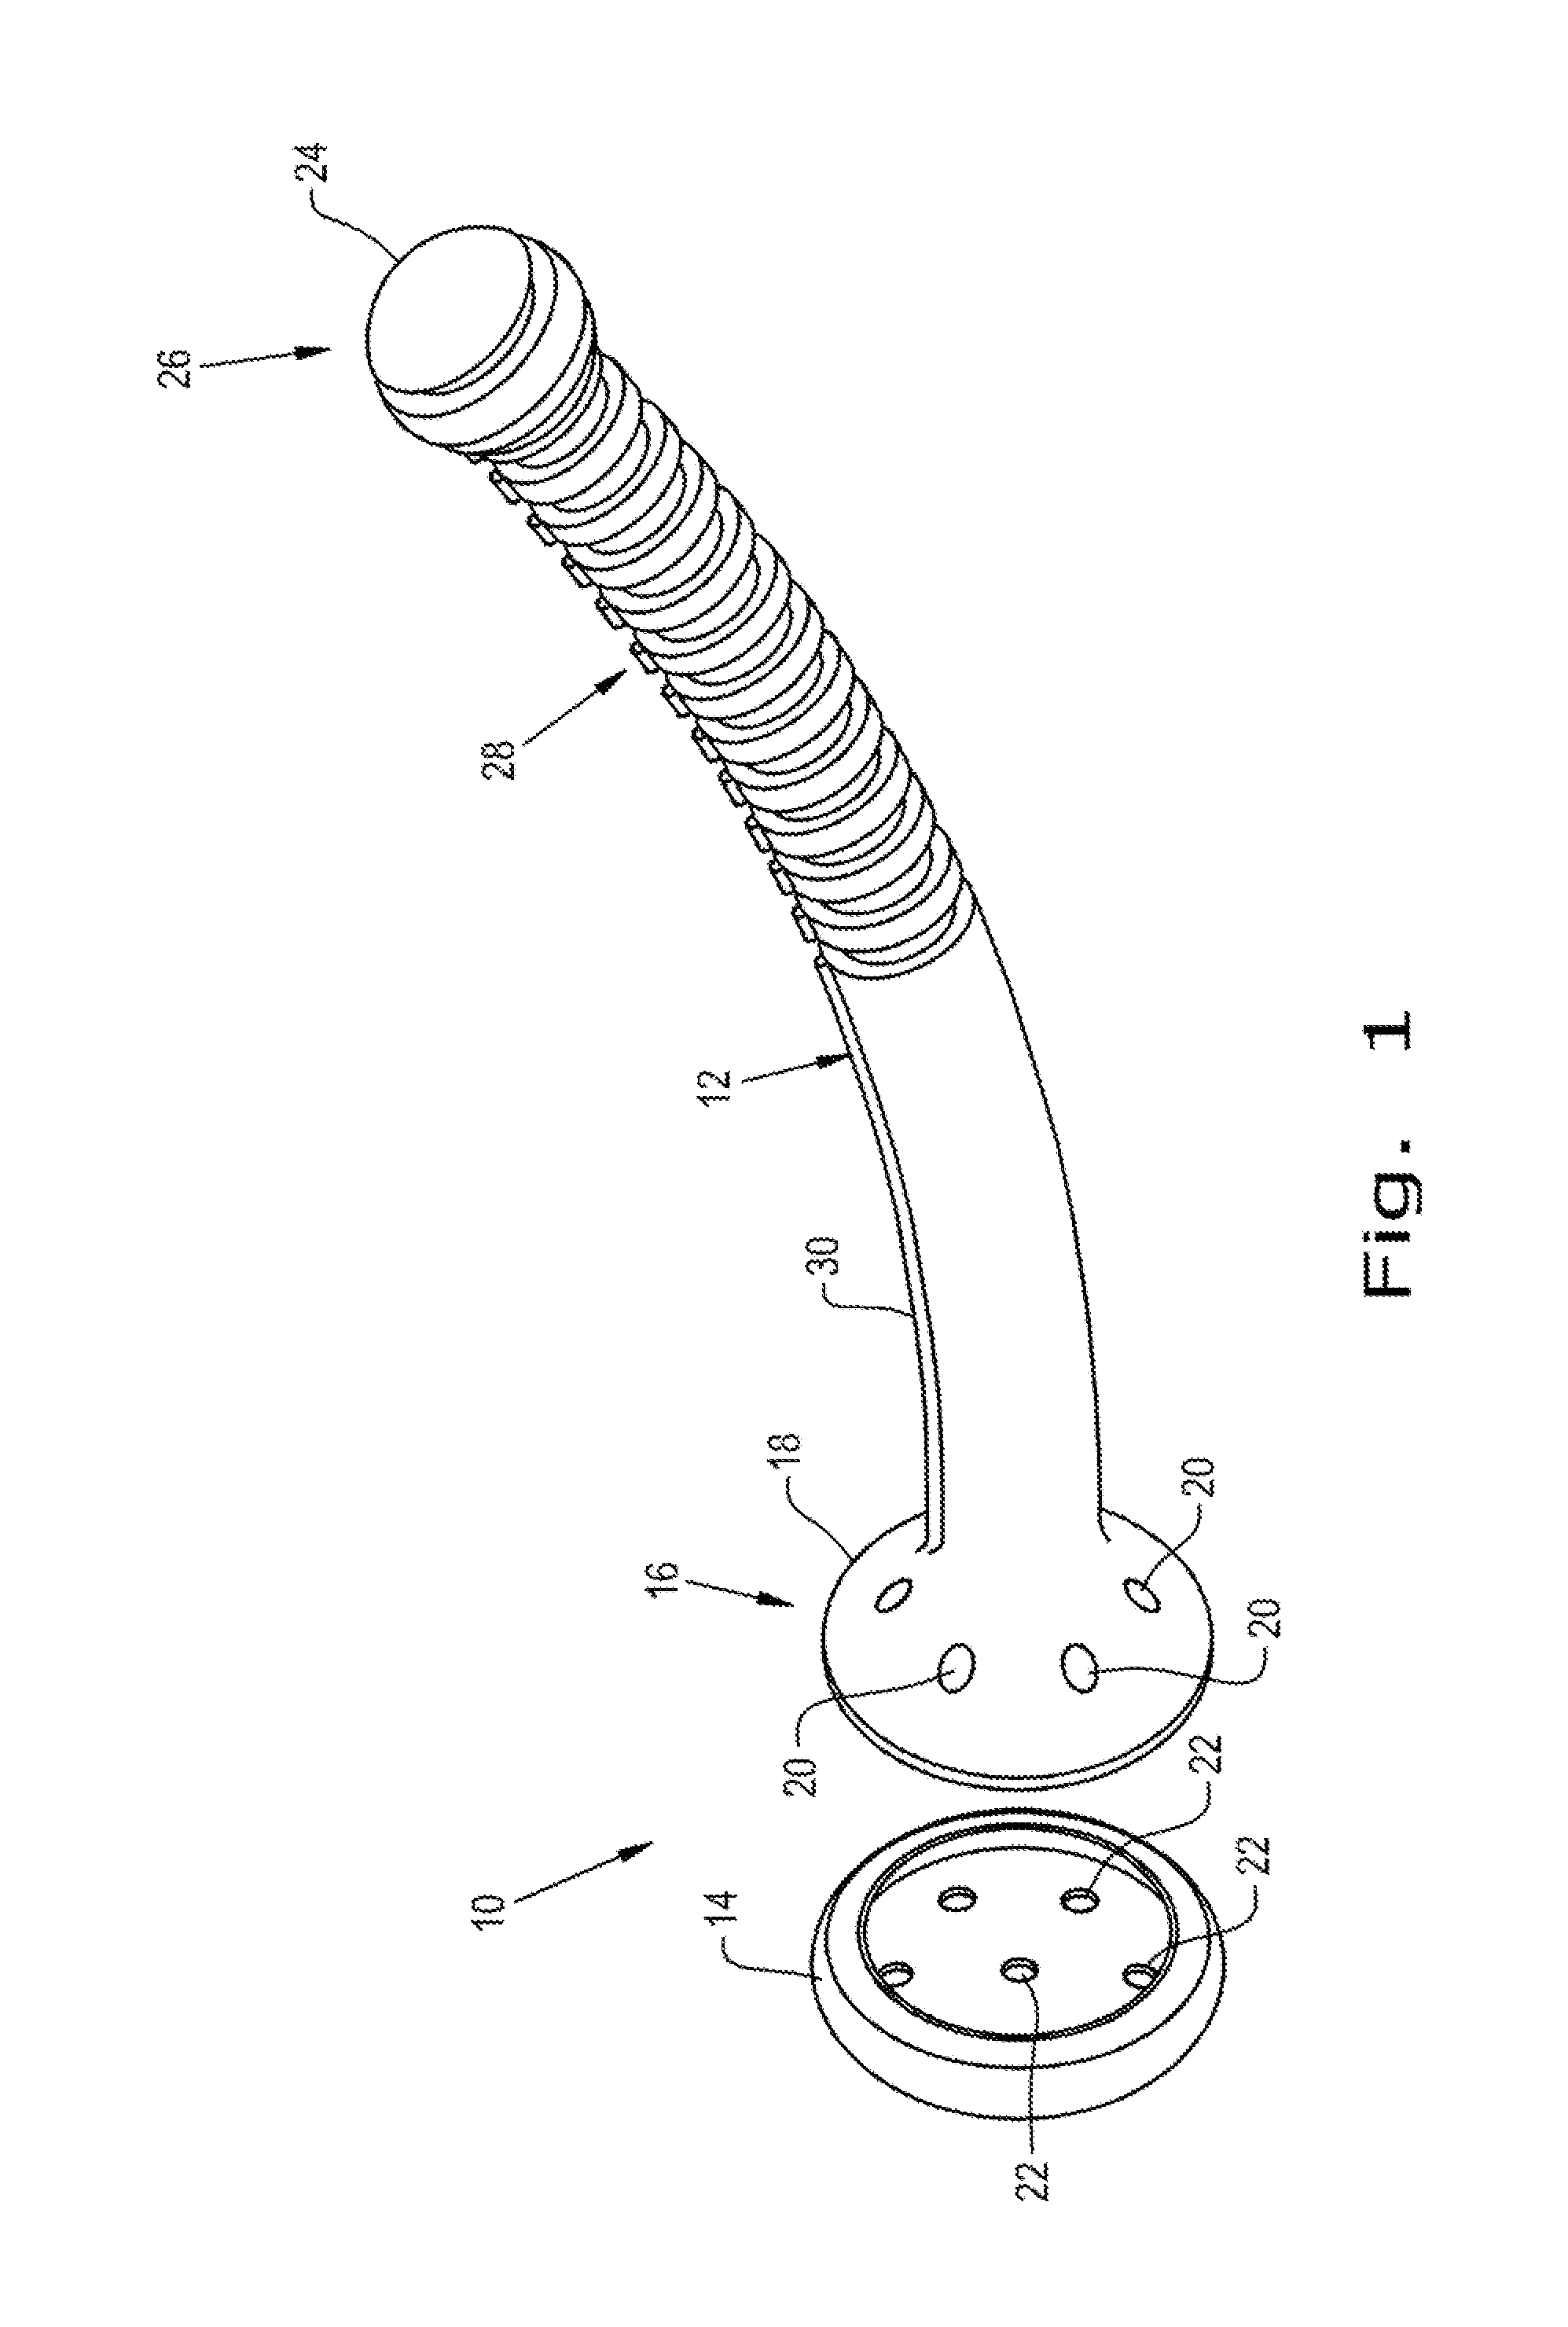 Obstetrical instrument